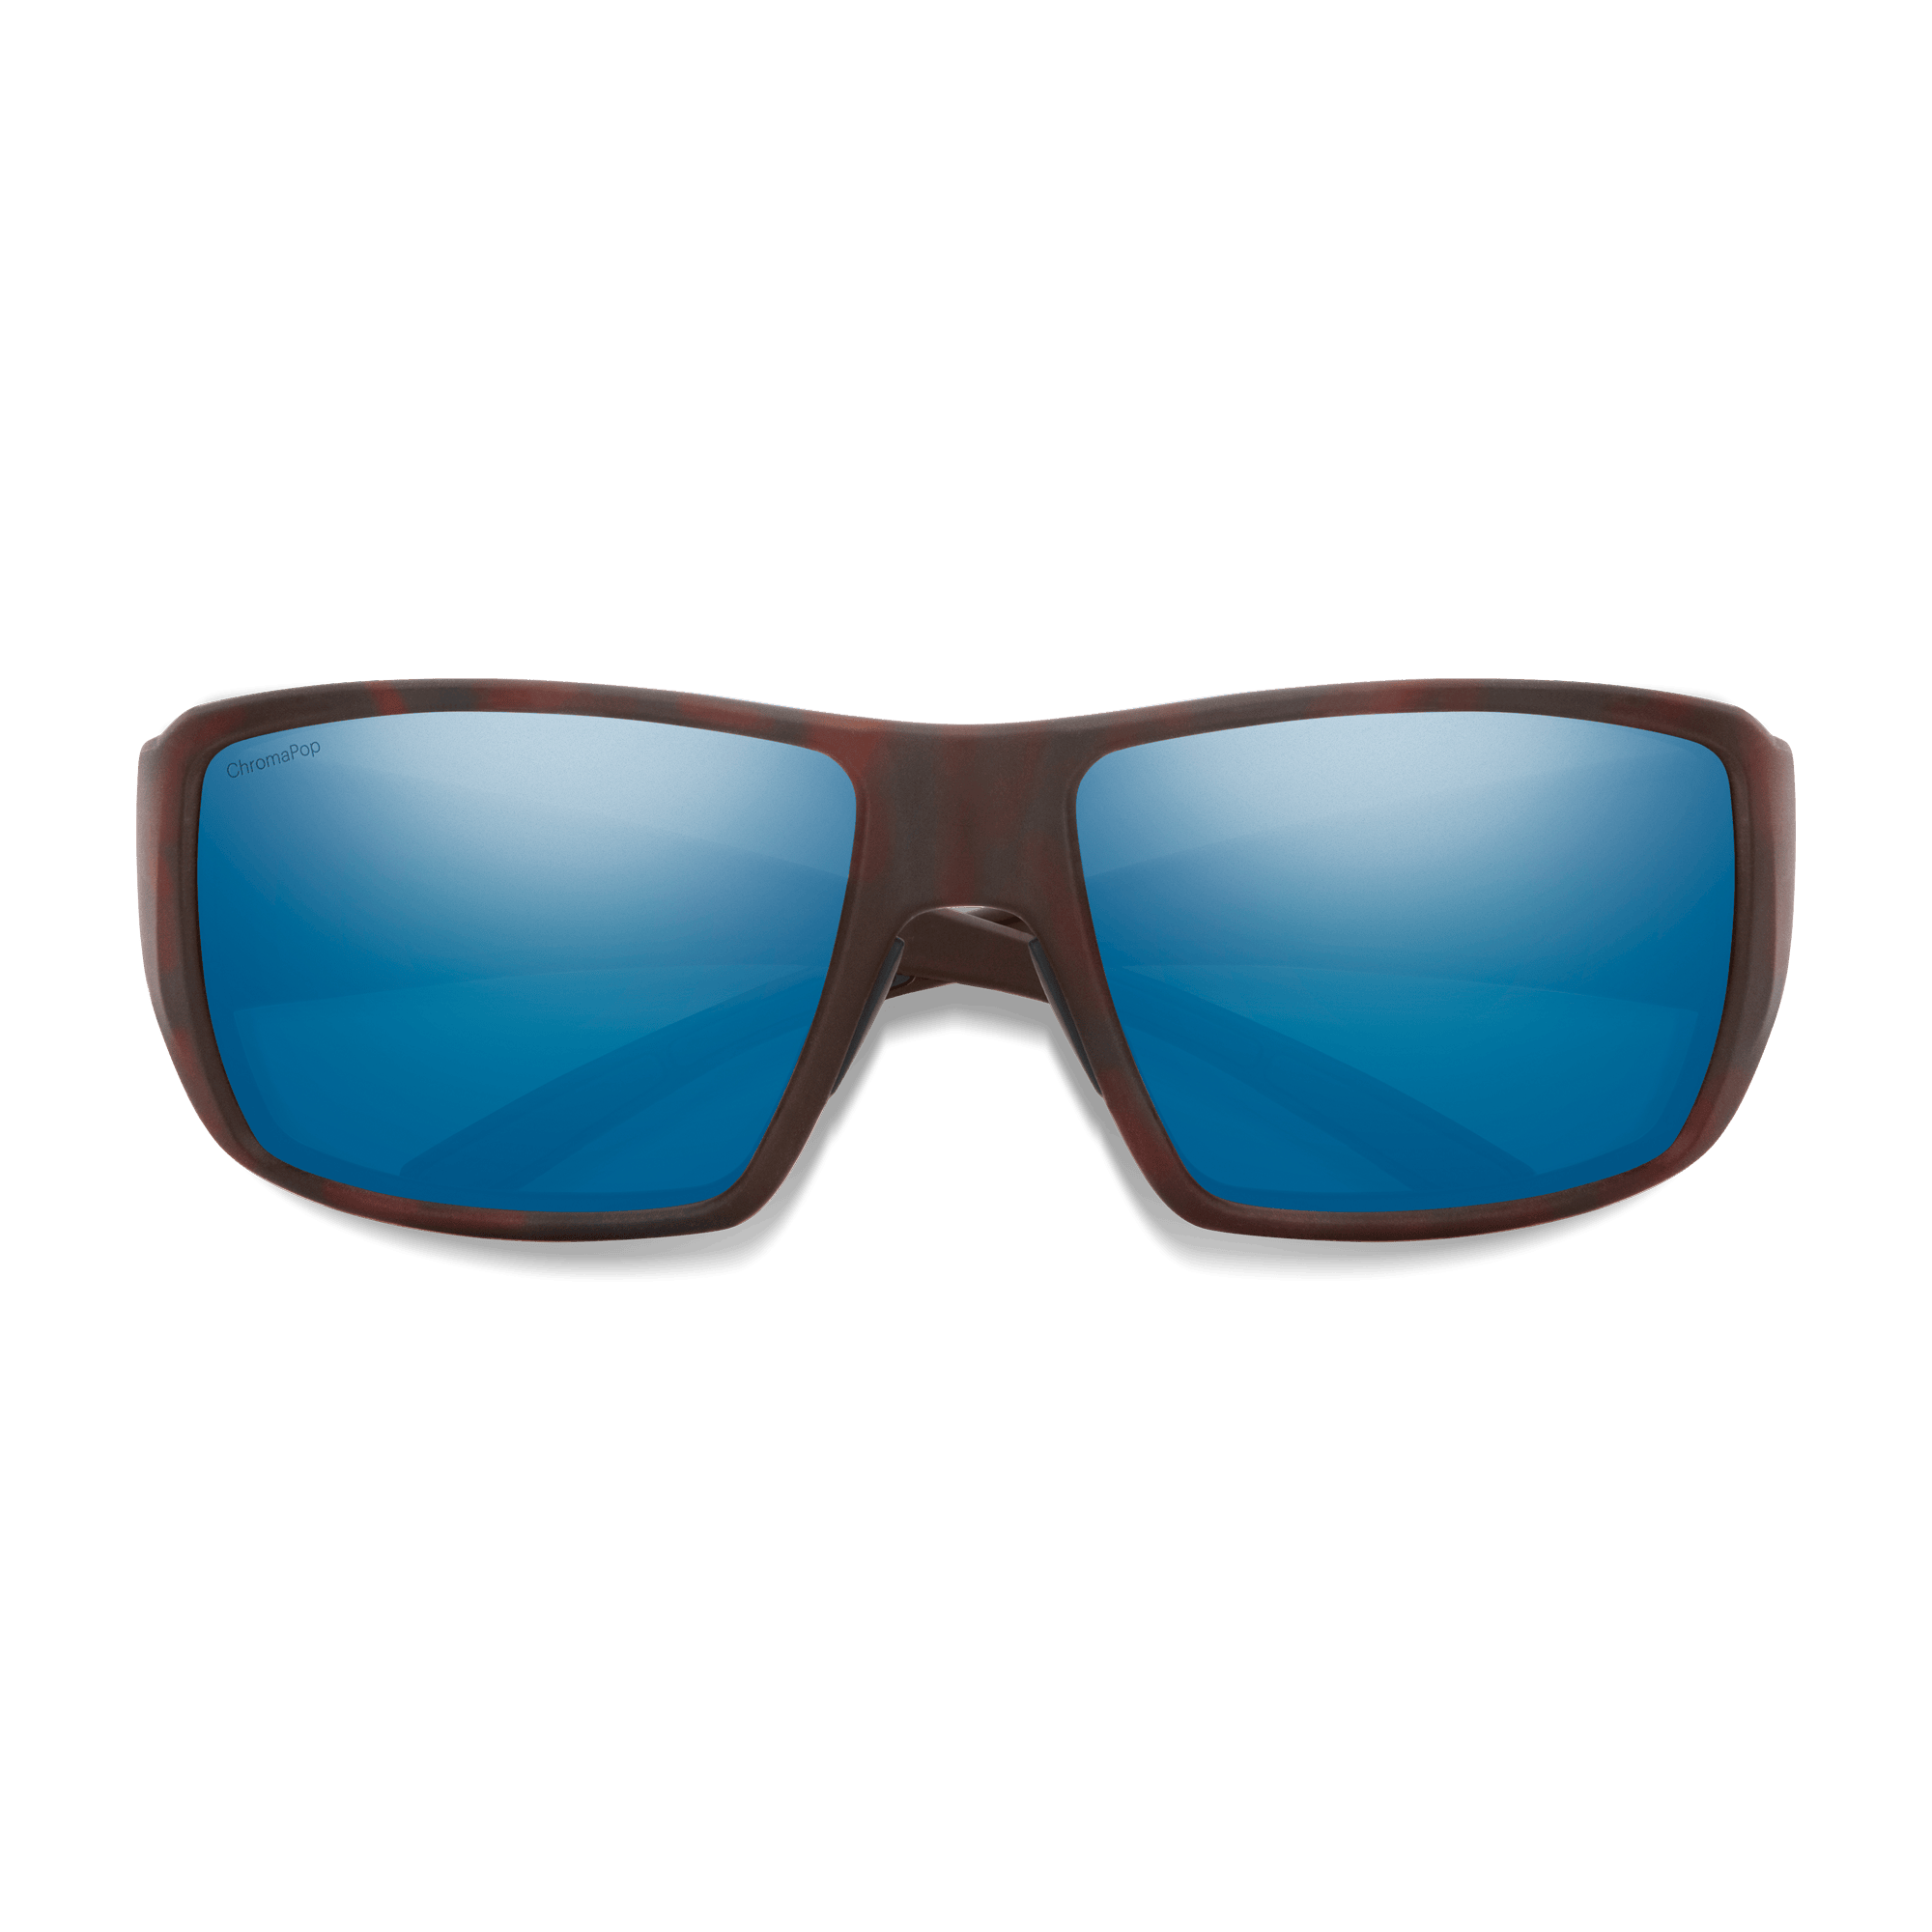 Guide's Choice, Matte Tortoise + ChromaPop Glass Polarized Blue Mirror Lens, hi-res